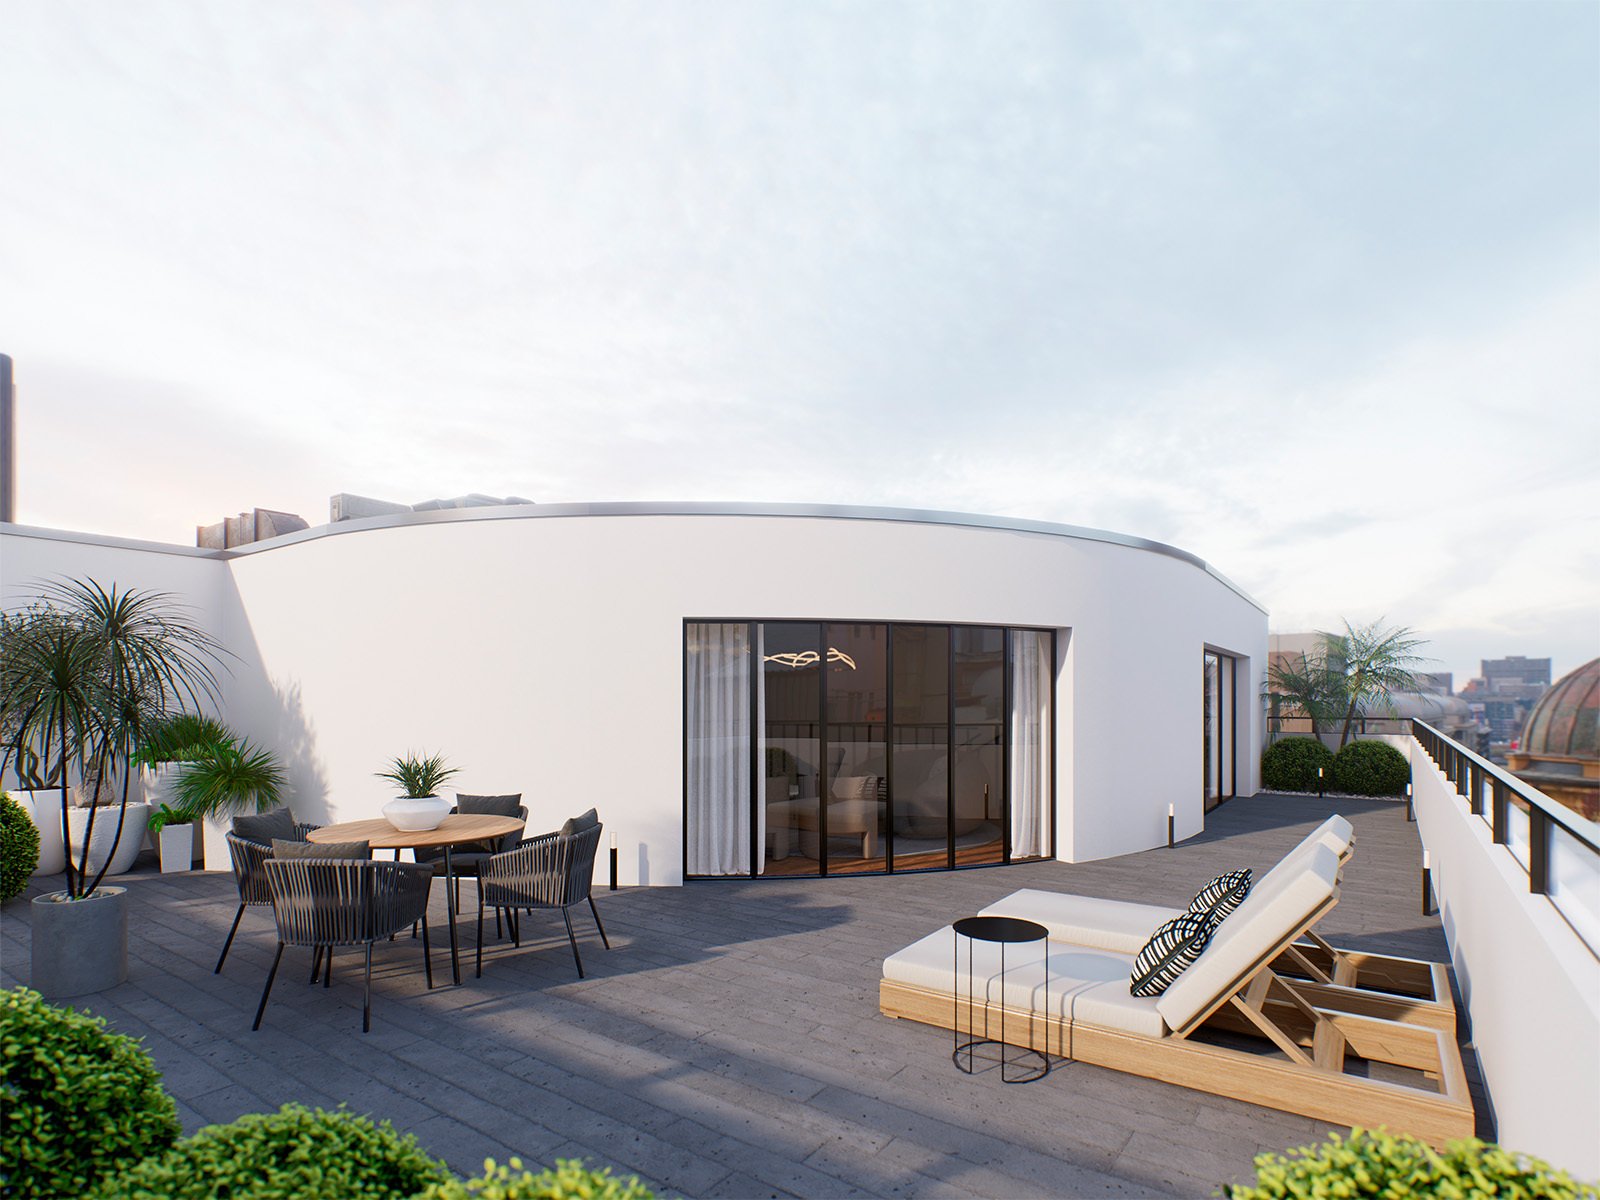 3 bedroom duplex apartment inserted in new development in Matosinhos